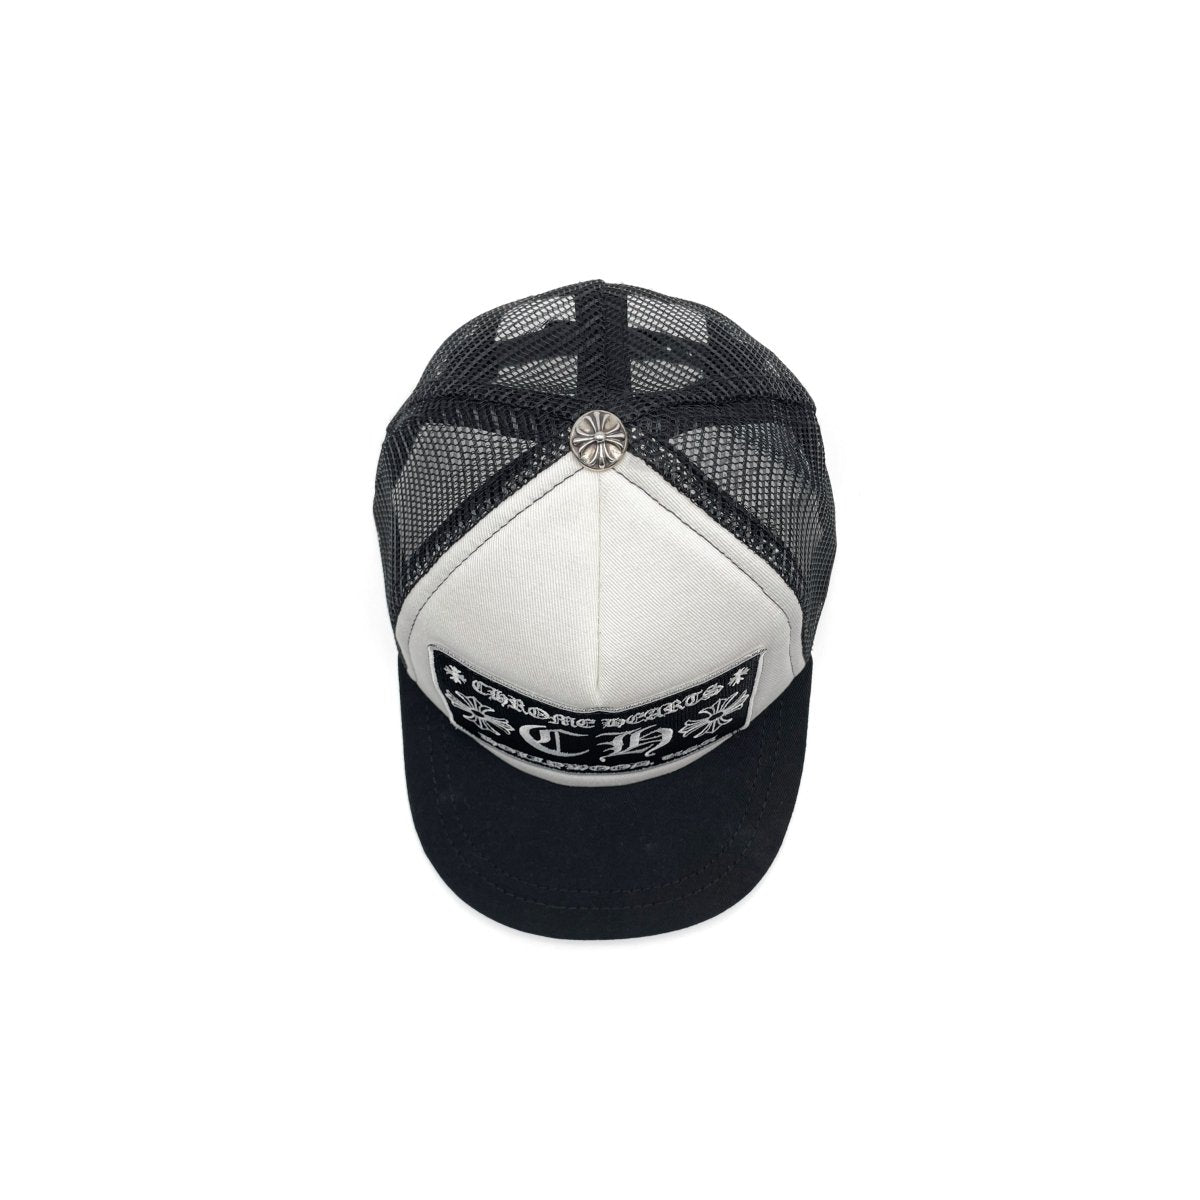 Chrome Hearts Embroidered CH Cross Logo Black & White Baseball Cap - SHENGLI ROAD MARKET